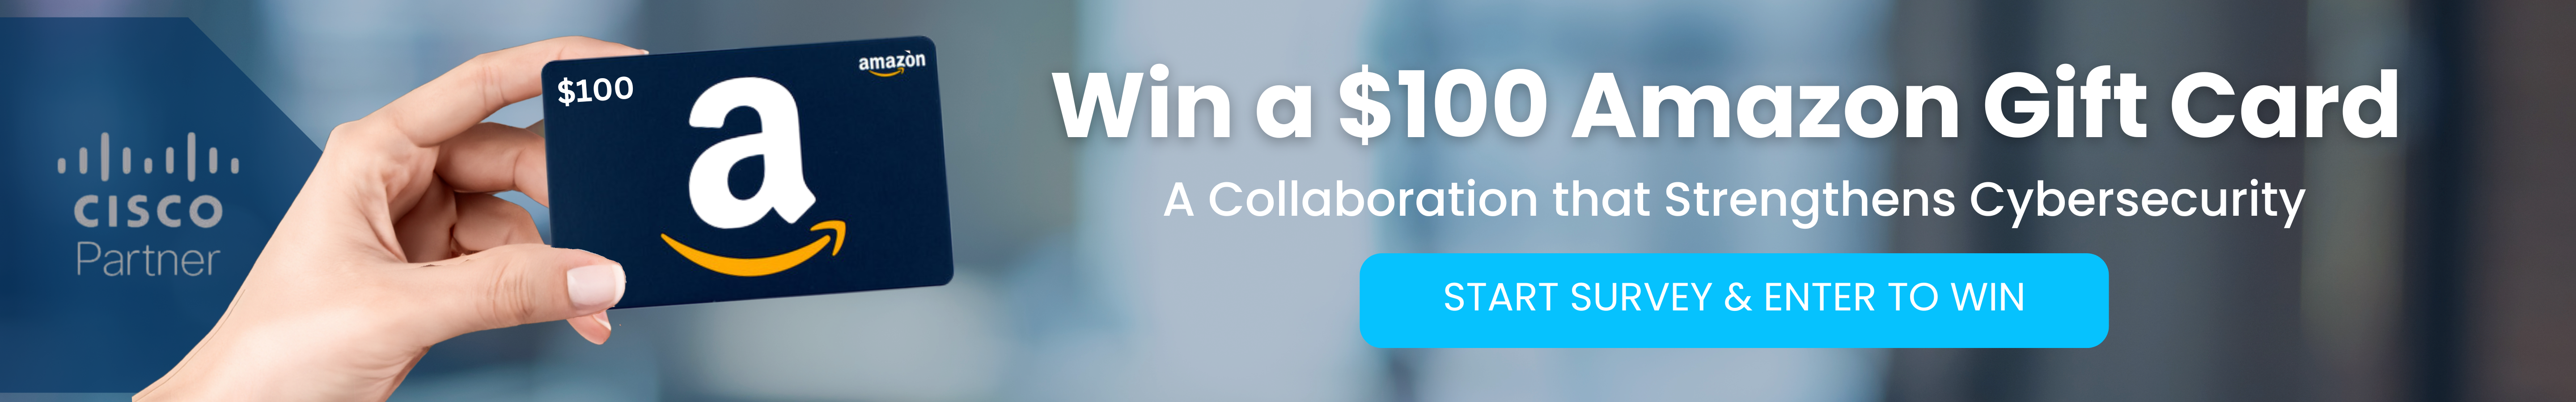 Win a $100 Amazon Gift Card - Start Survey & Enter to Win